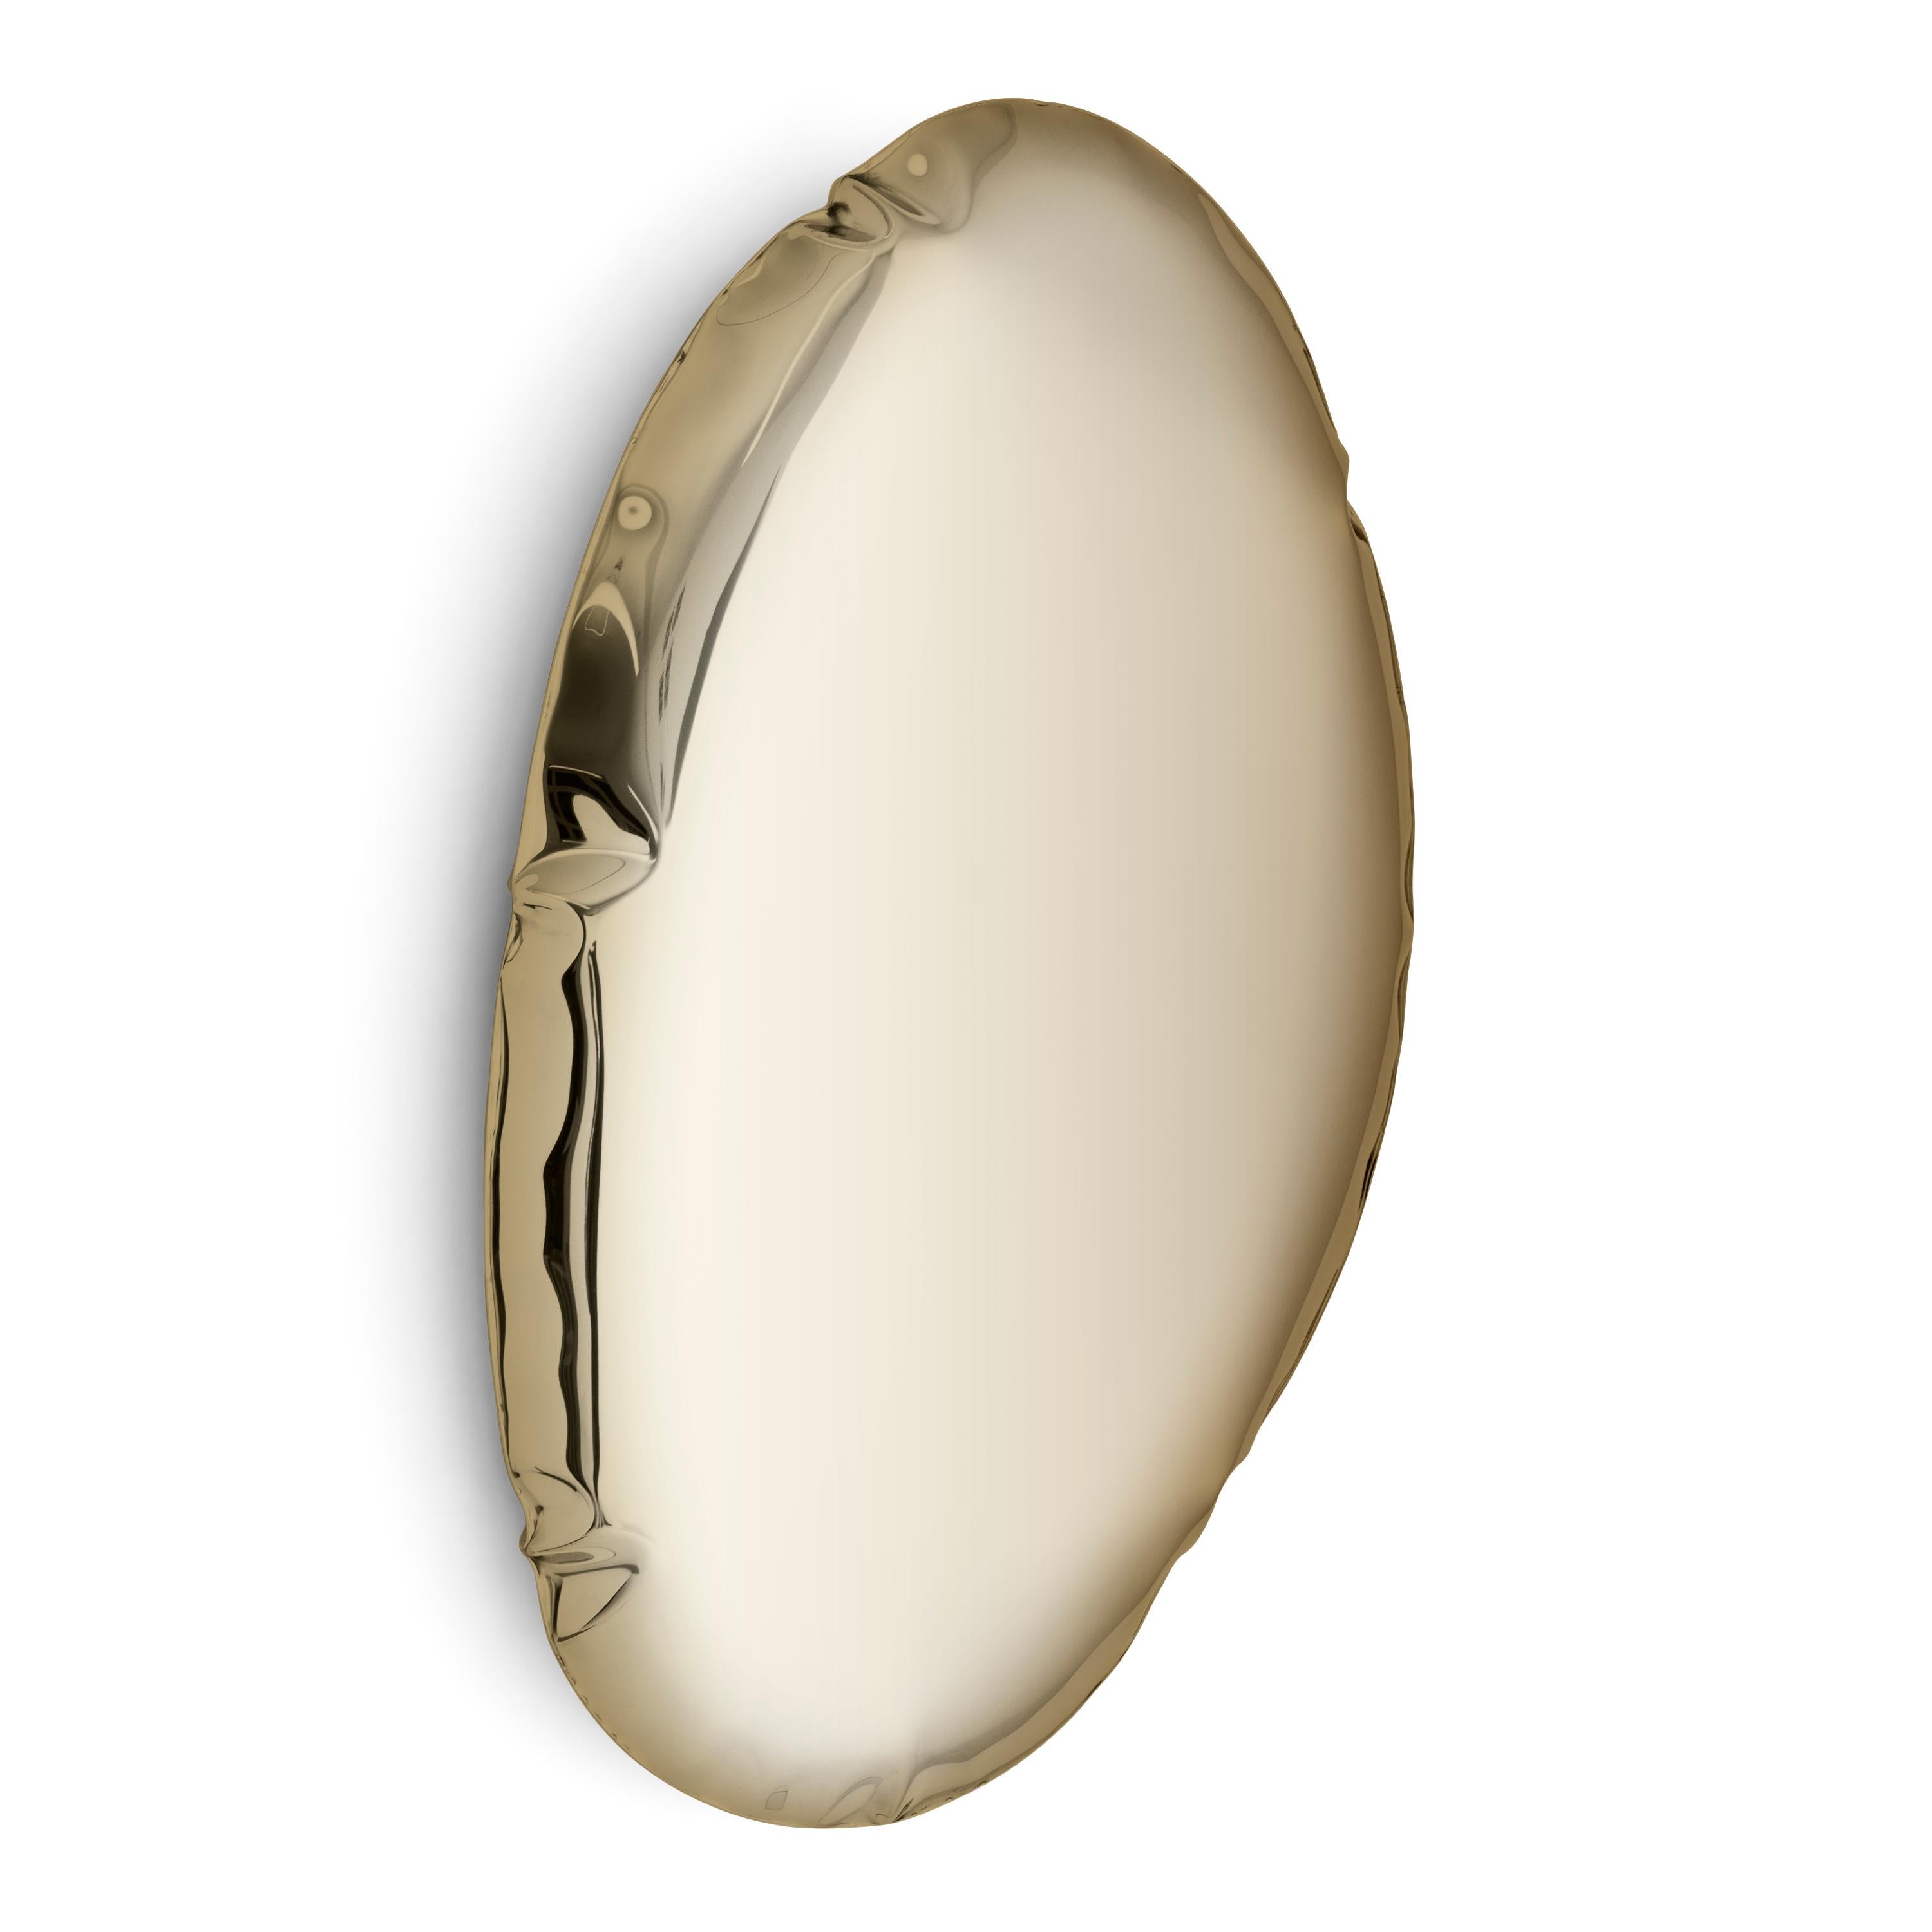 Organic Modern Contemporary Mirror 'Tafla O5', AURUM Collection, Light Gold, by Zieta For Sale